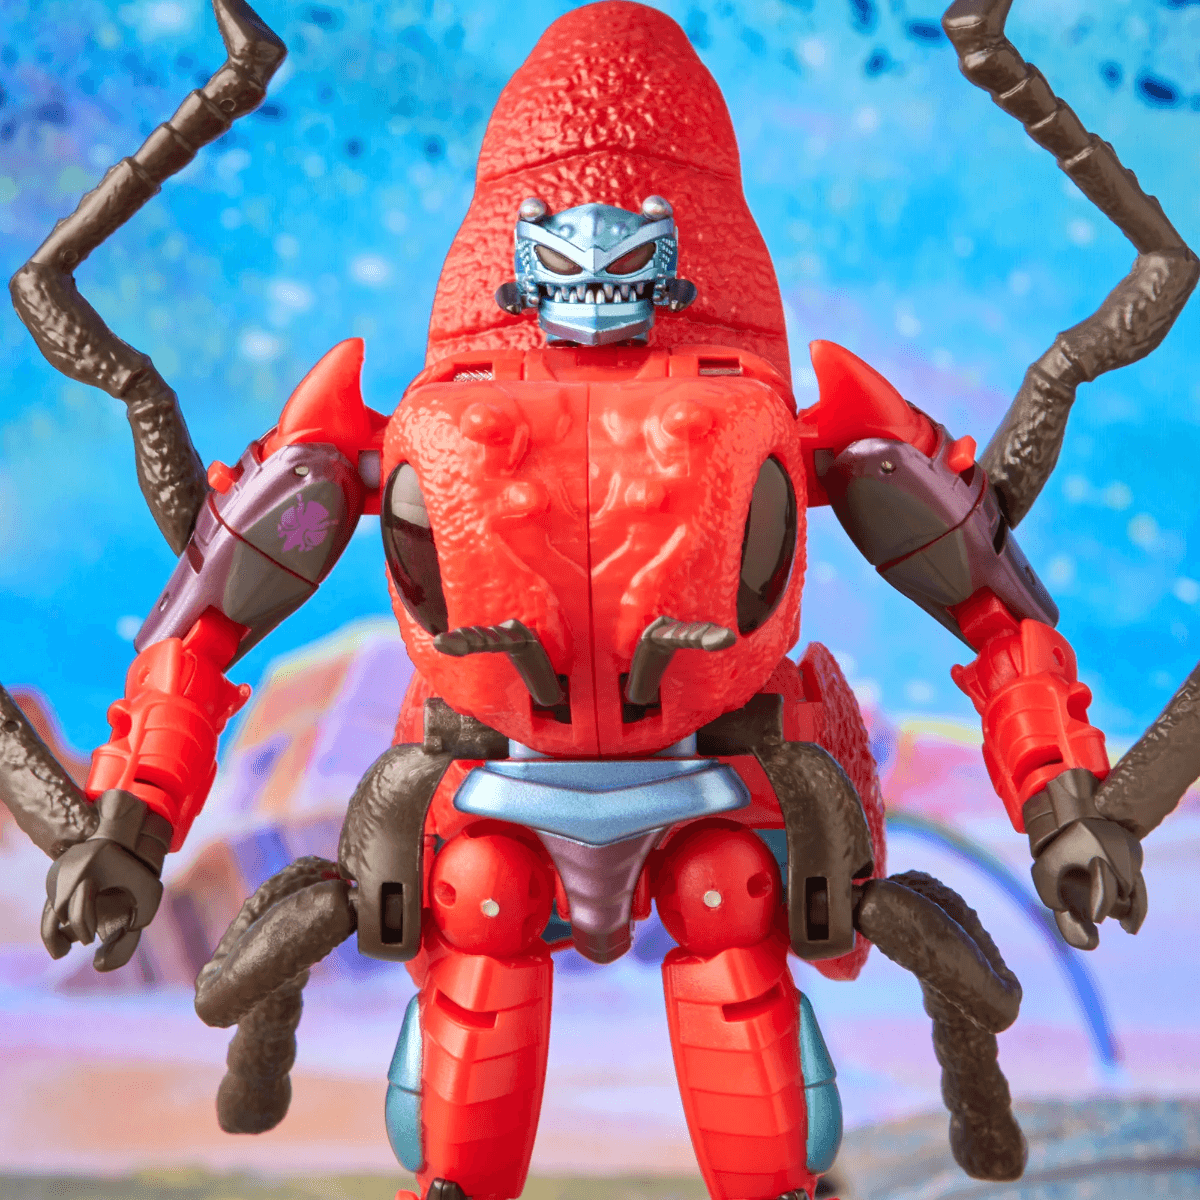 23178 Transformers Legacy: Voyager Class - Predacon Inferno Action Figure - Hasbro - Titan Pop Culture